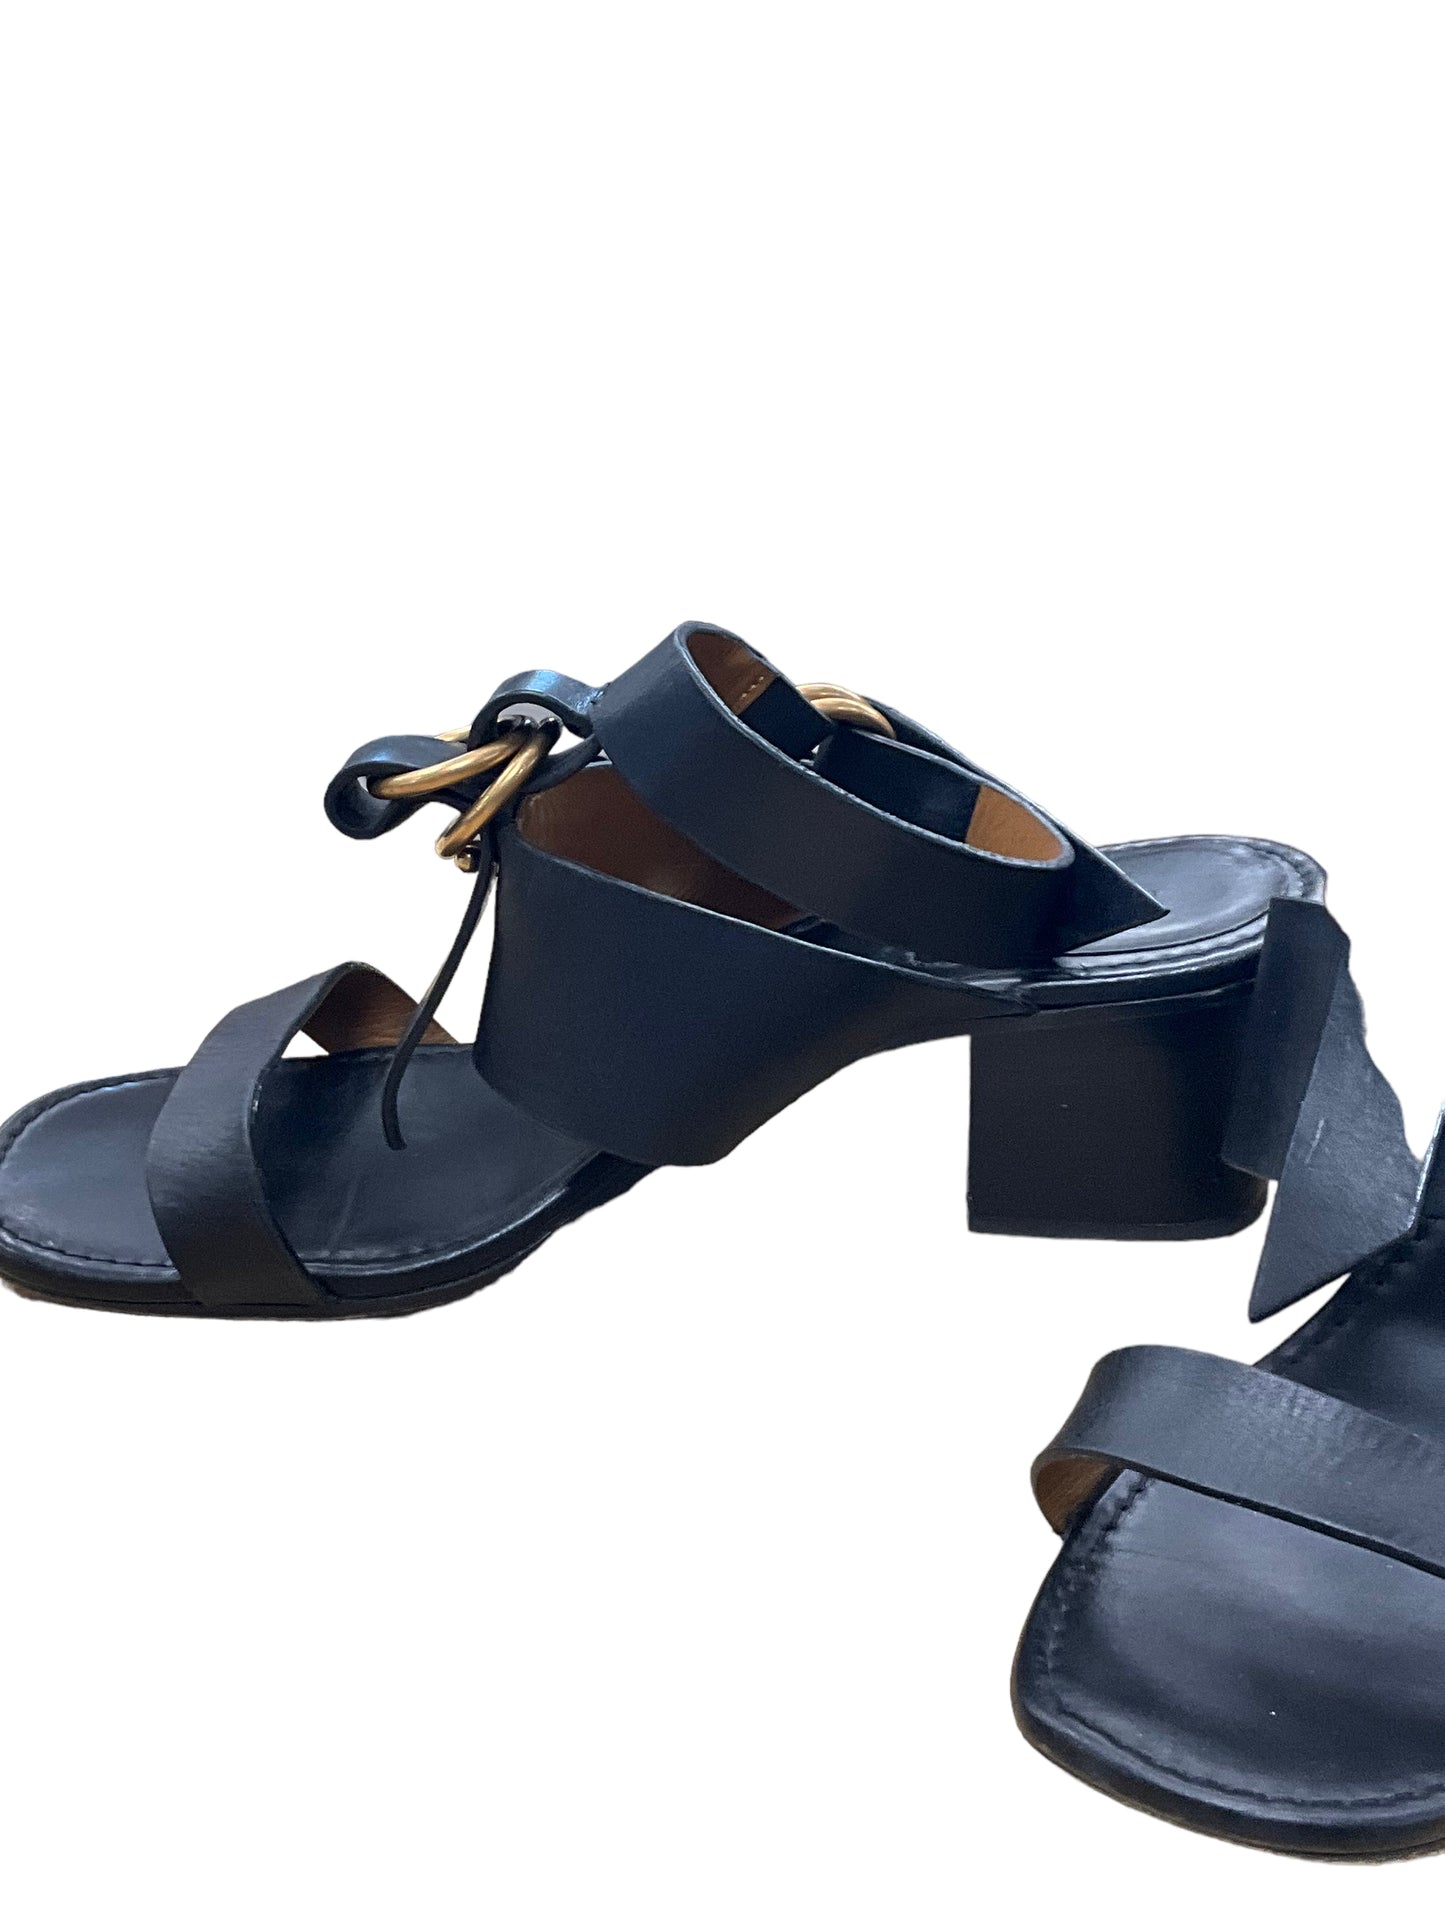 Sandals Heels Block By Chloe  Size: 7